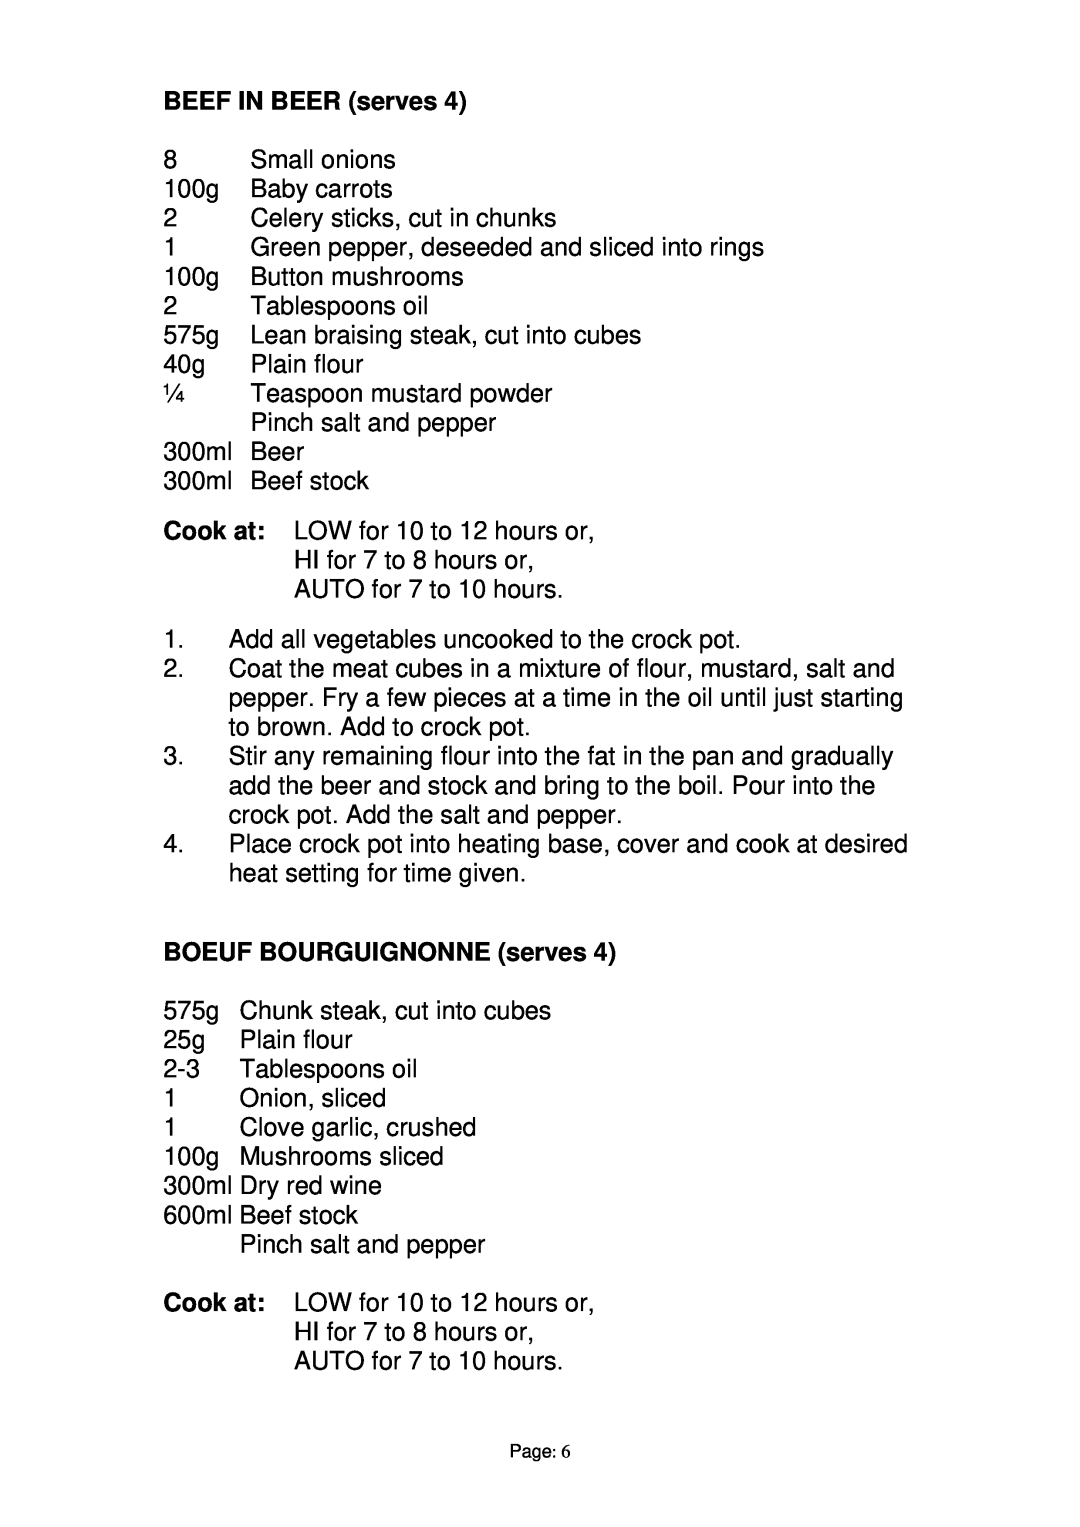 Prima PSO003 manual BEEF IN BEER serves, BOEUF BOURGUIGNONNE serves 